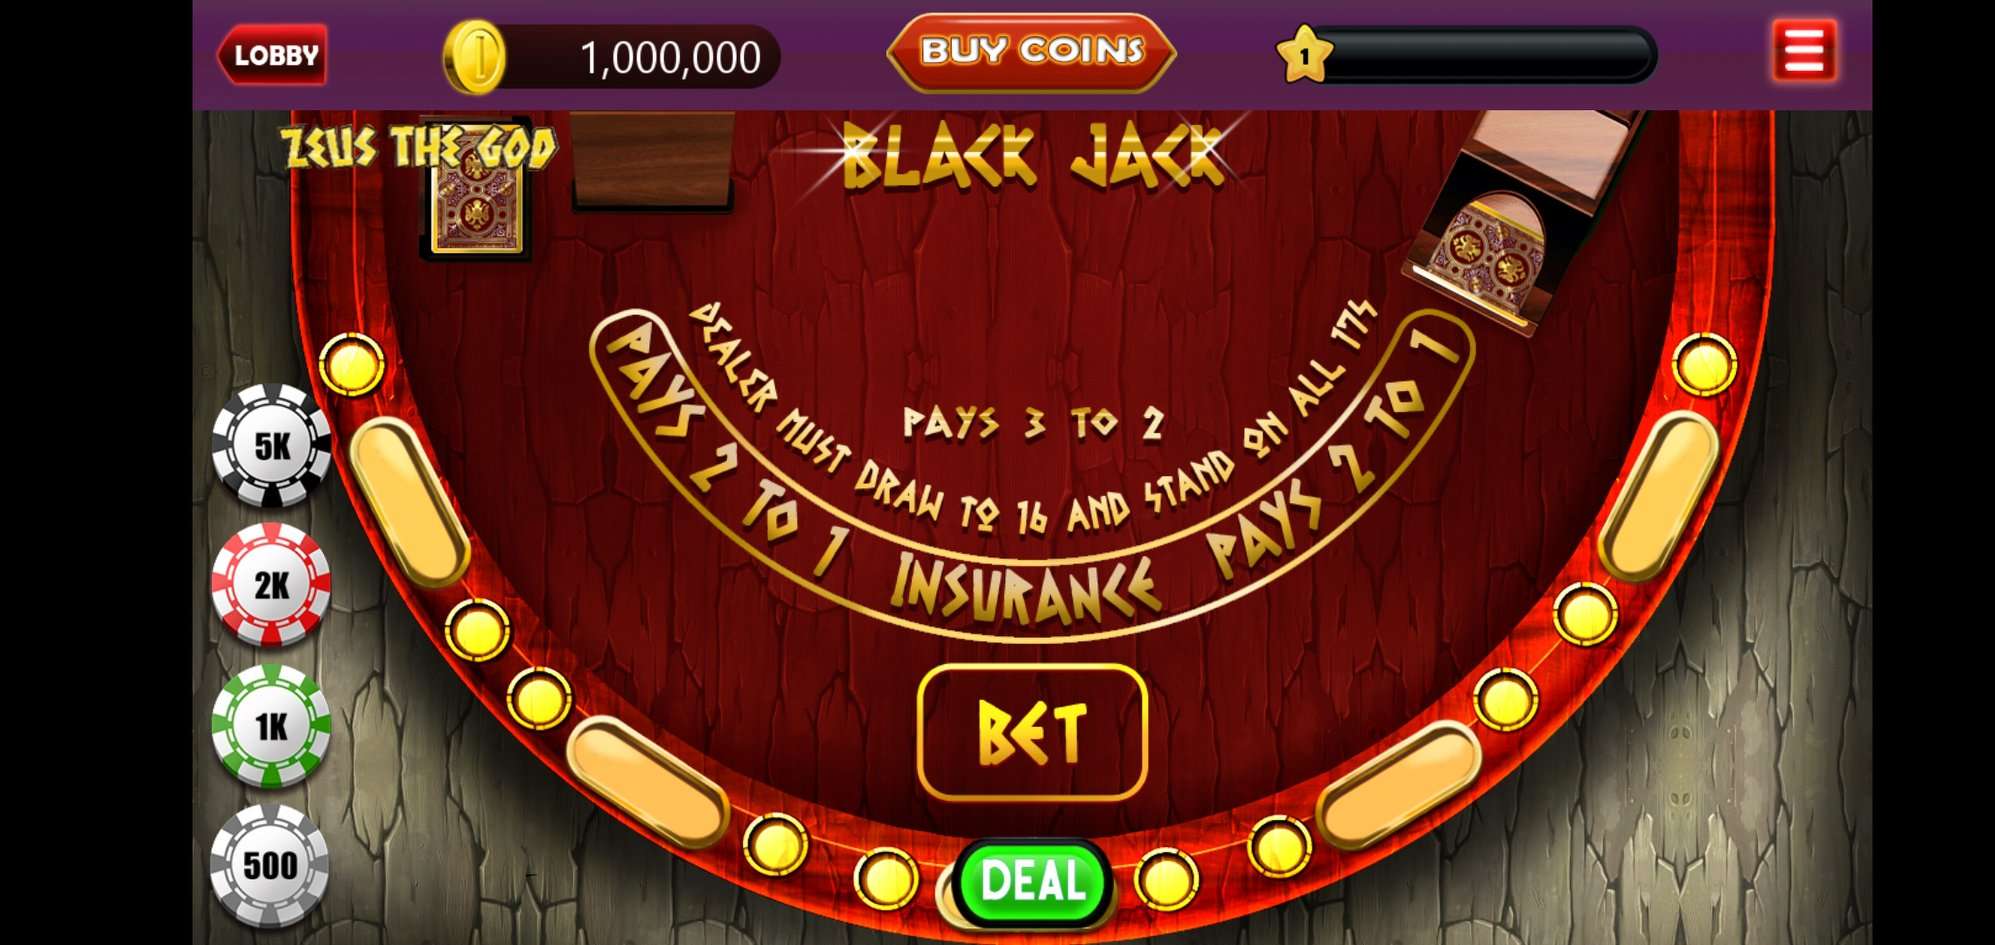 4 in 1 Slots, Blackjack, Roulette, Baccarat